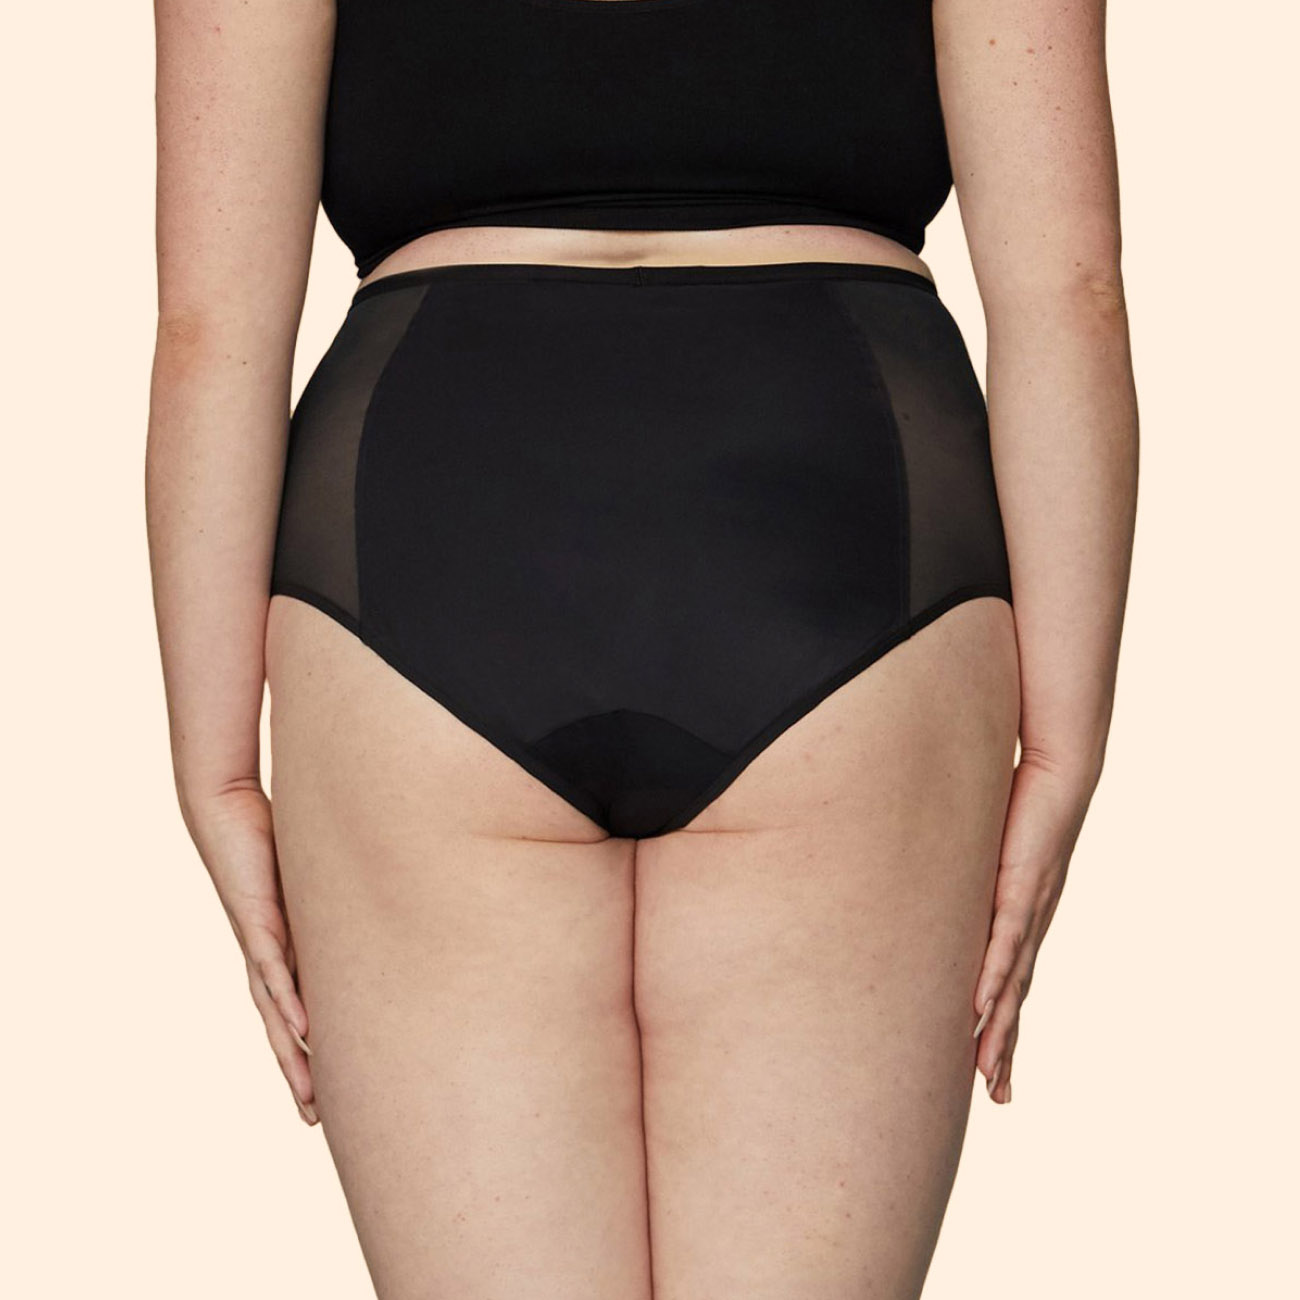 XZHGS Graphic Prints Winter Thong Women's Leak Proof High Waist Pure Cotton  Large Size underwear Black Mesh Bodysuit